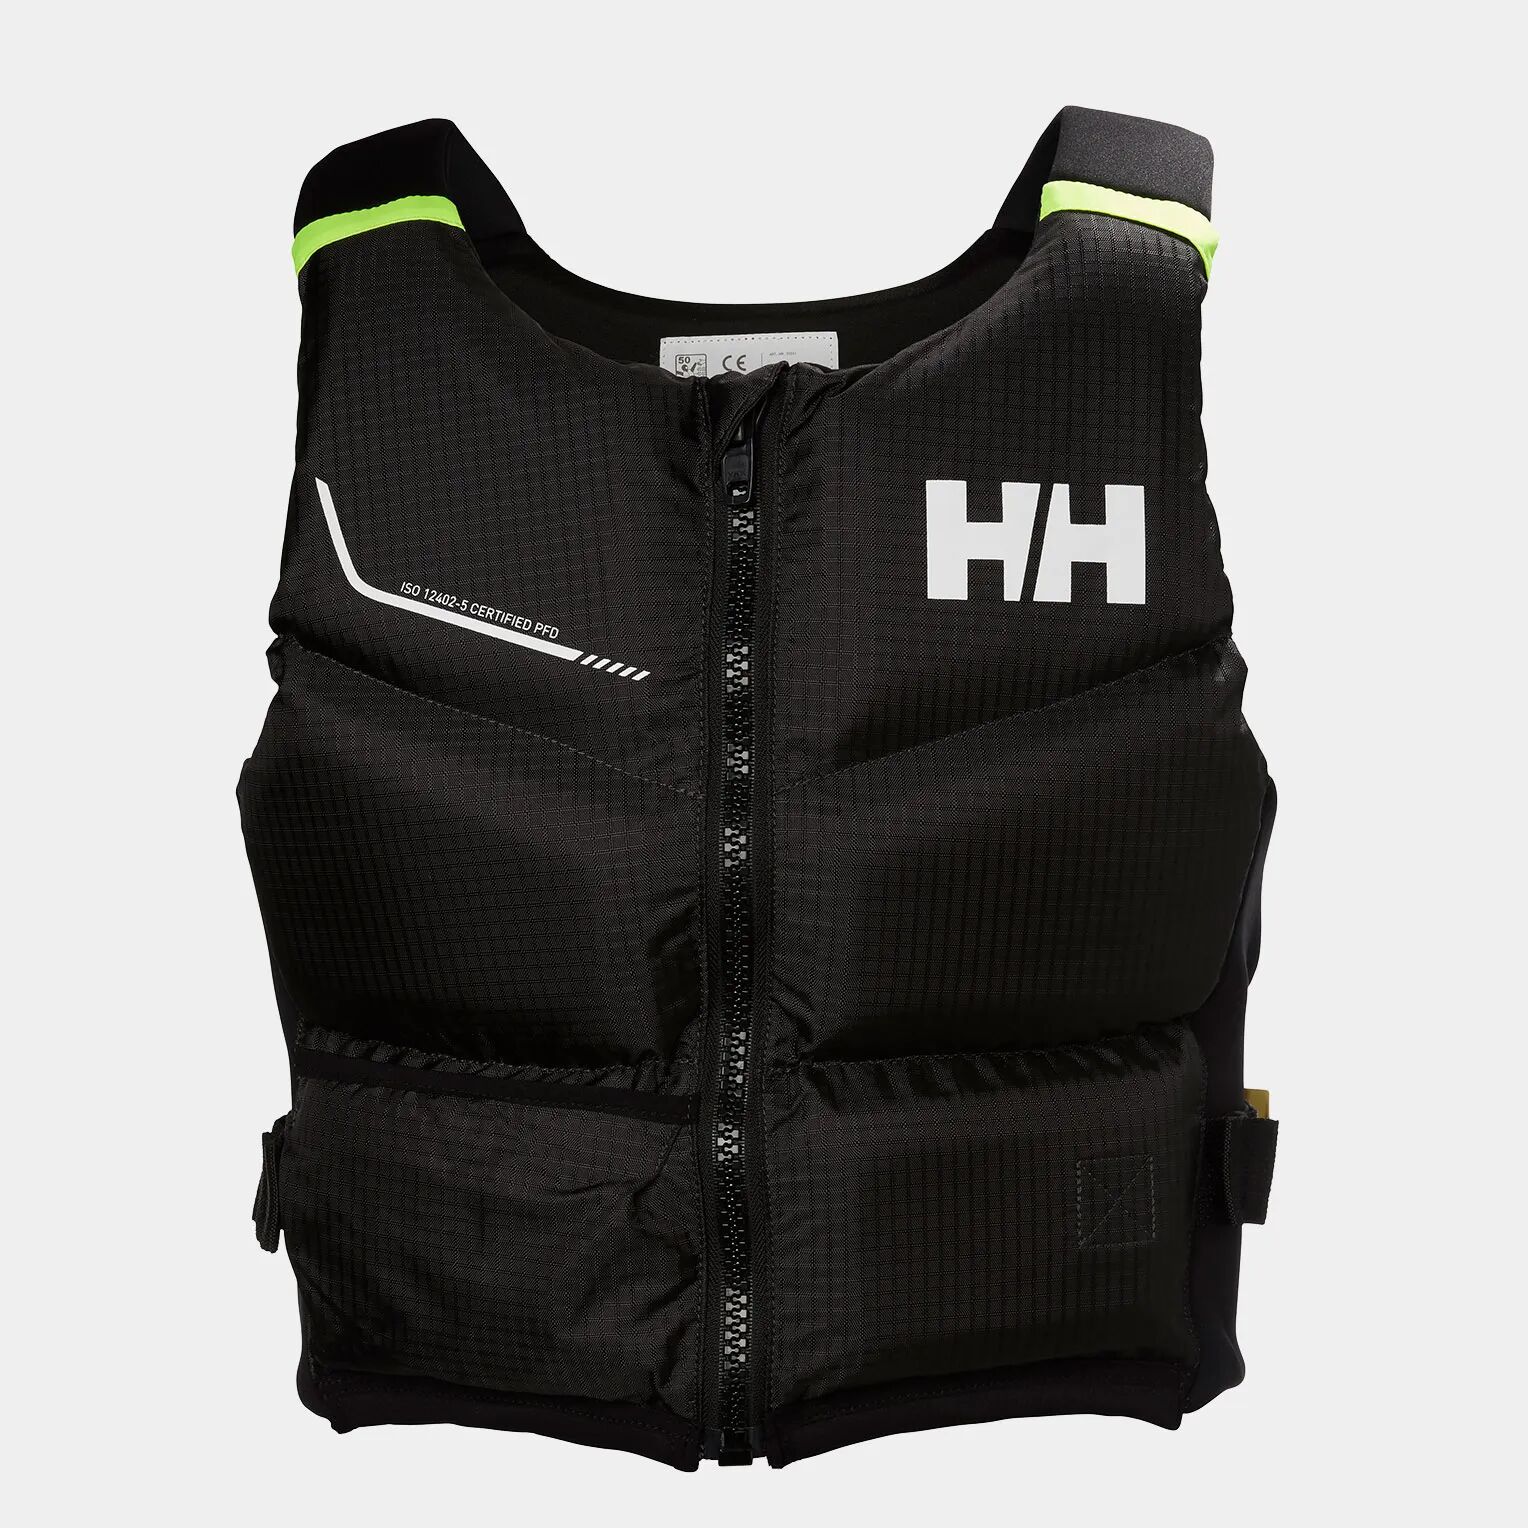 Helly Hansen Rider Stealth Zip - Low-Bulk Snug-fit Unisex Life Vest Black 70/90KG - Ebony Black - Unisex